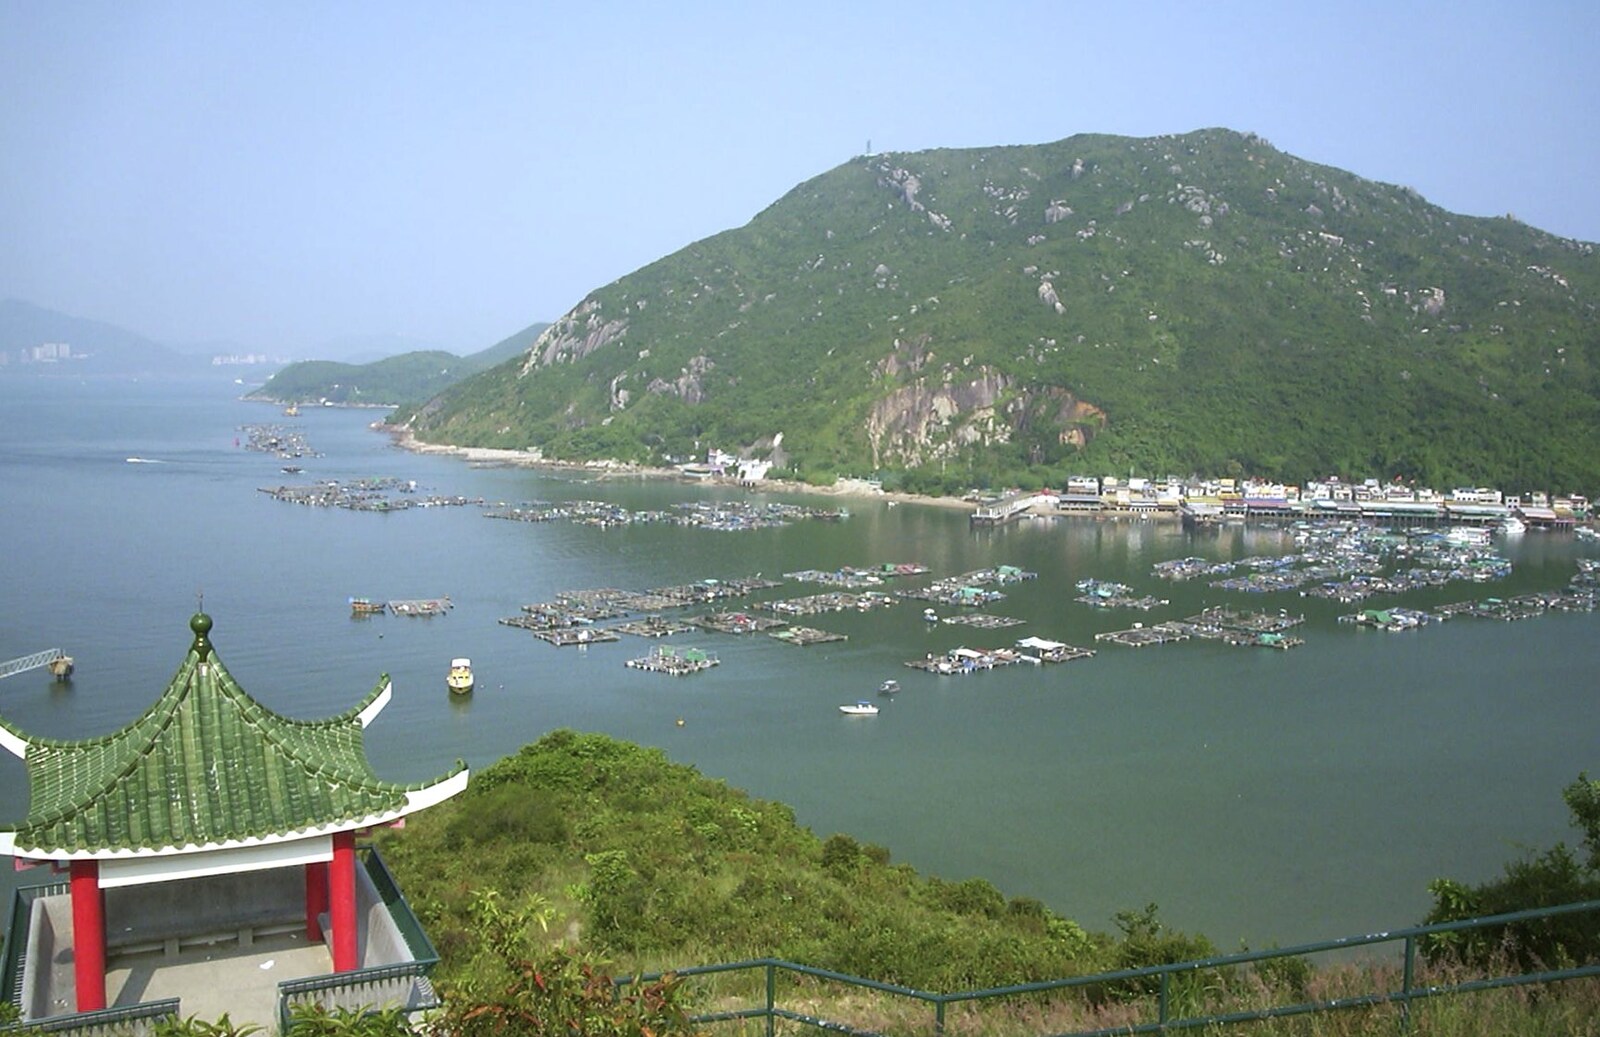 Lamma Island, Hong Kong, China - 20th August 2001: Looking down onto the floating village of Sok Kwo Wan